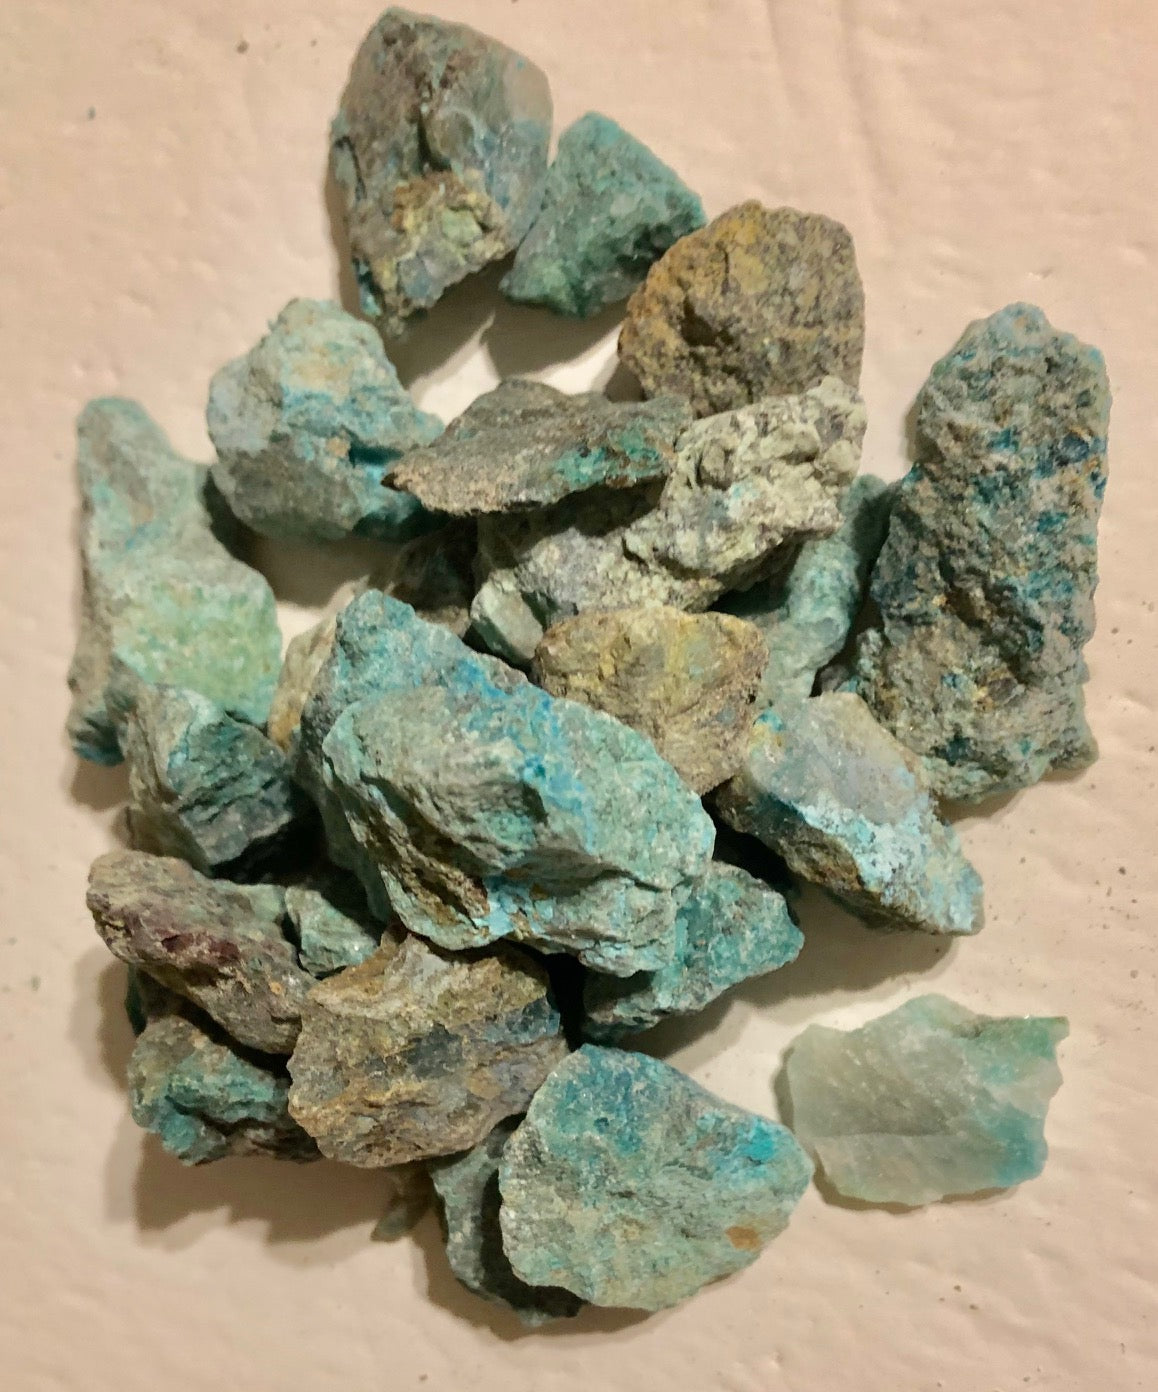 Bulk Genuine Turquoise rough nuggets - 1/4 pound - 15+ pieces